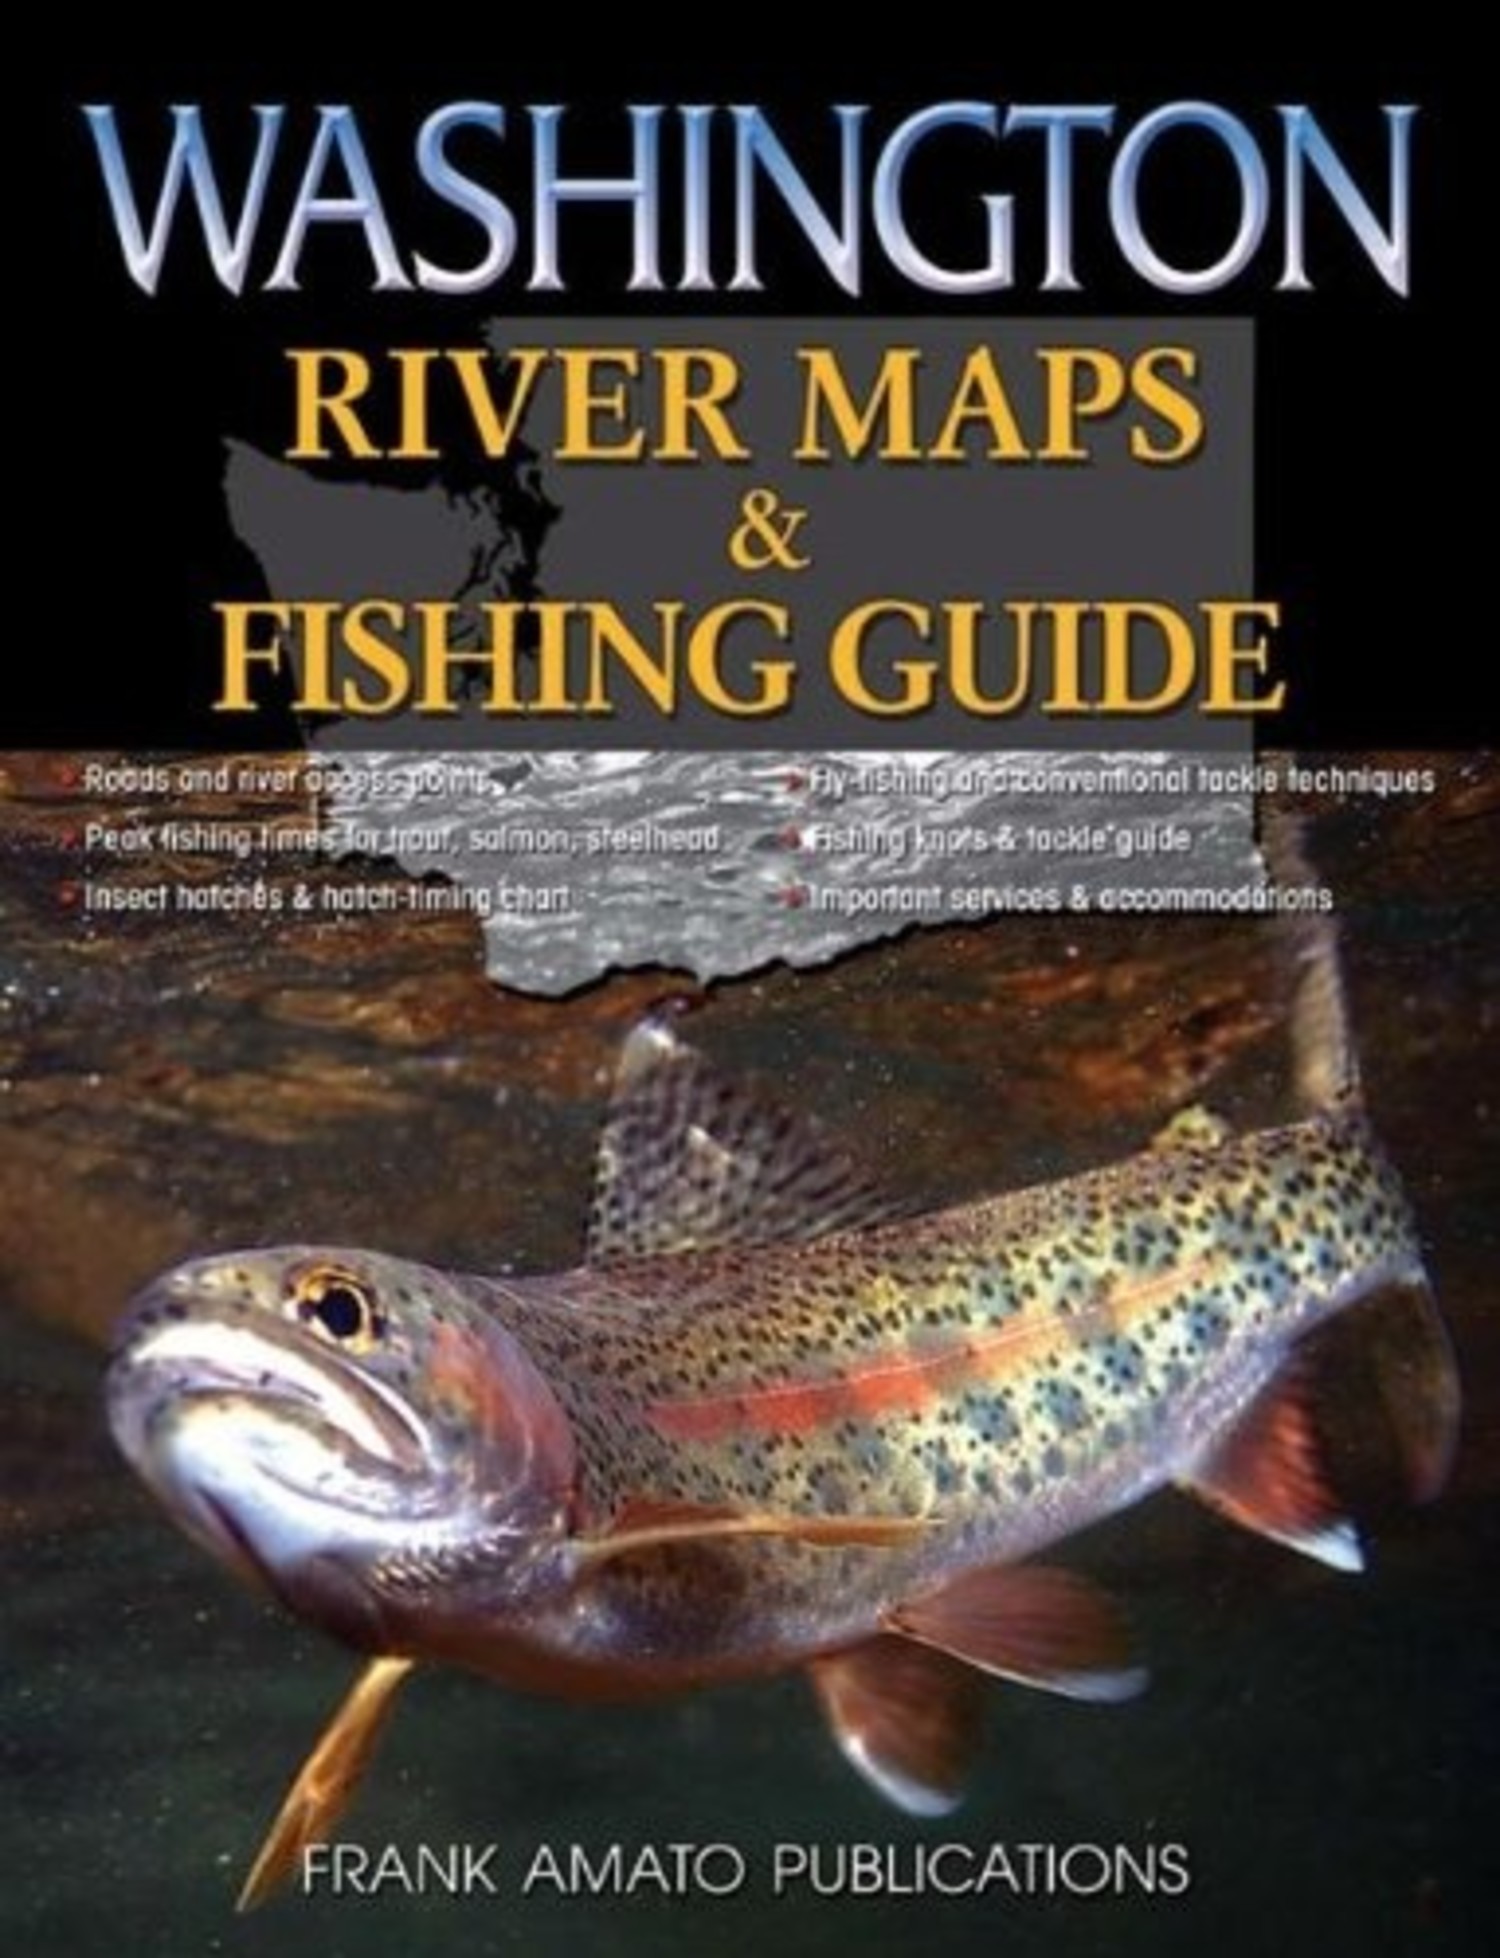 https://cdn.shoplightspeed.com/shops/618341/files/10329086/1500x4000x3/anglers-books-washington-river-maps-fishing-guide.jpg